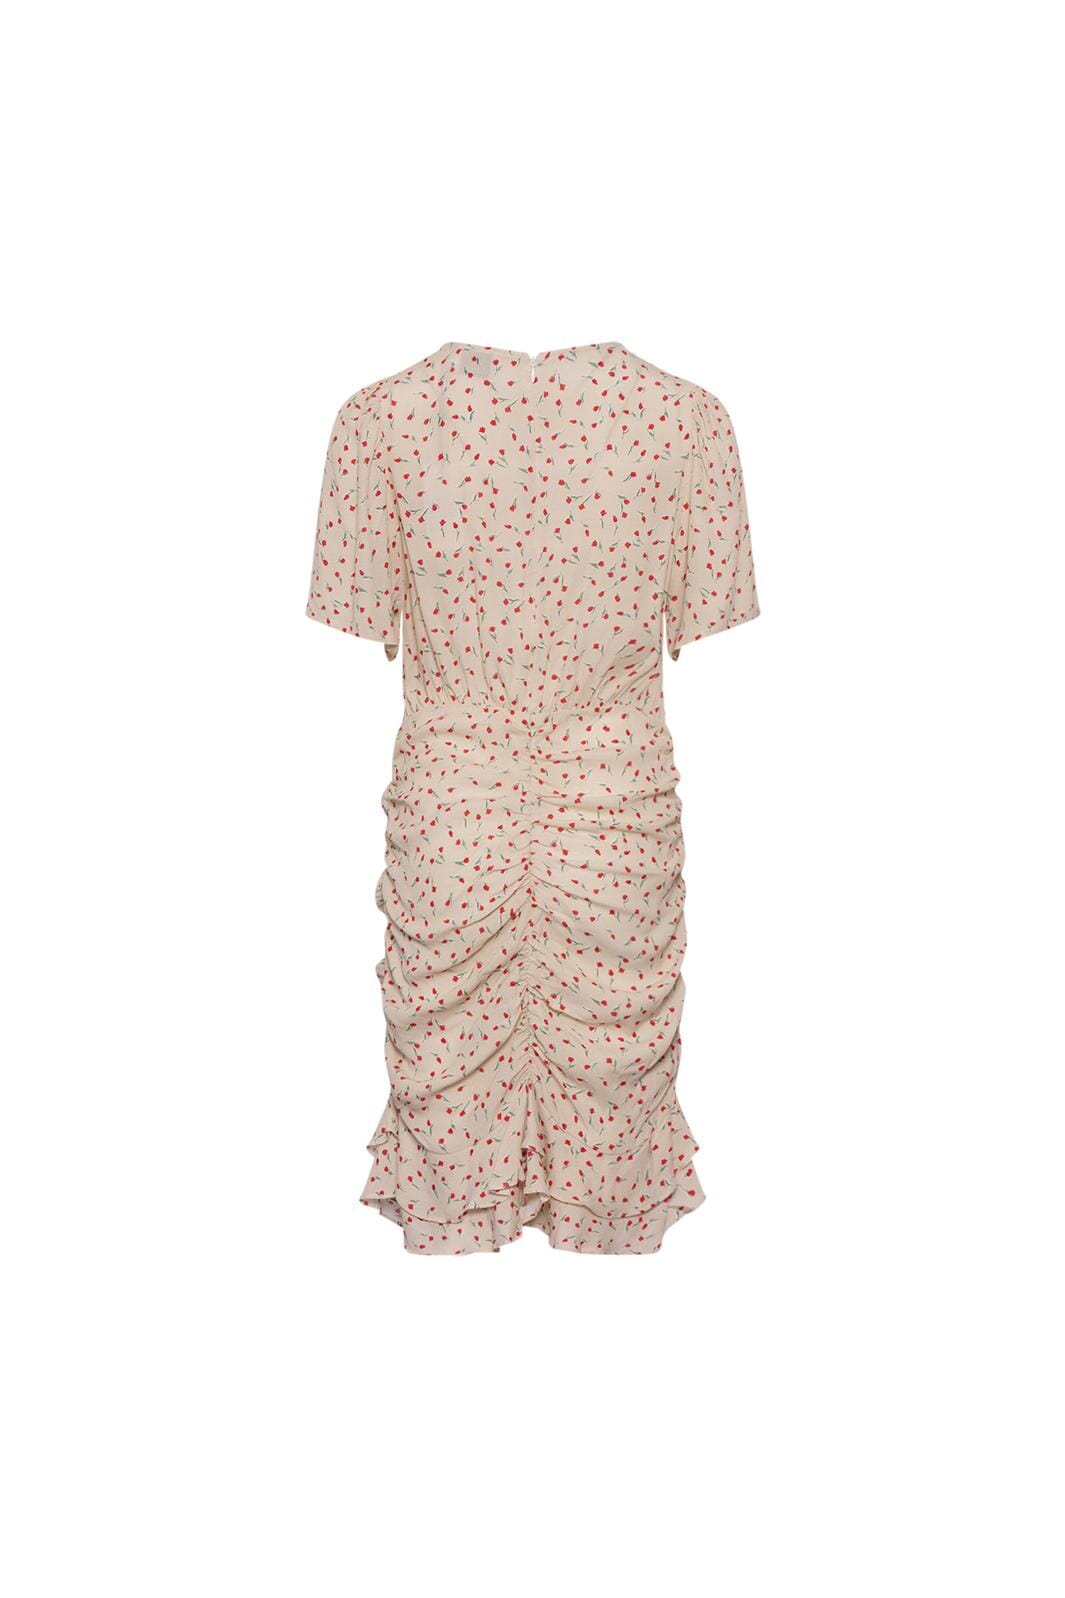 Noella - Sloane Dress - 988 Cream/Red Mini Flower